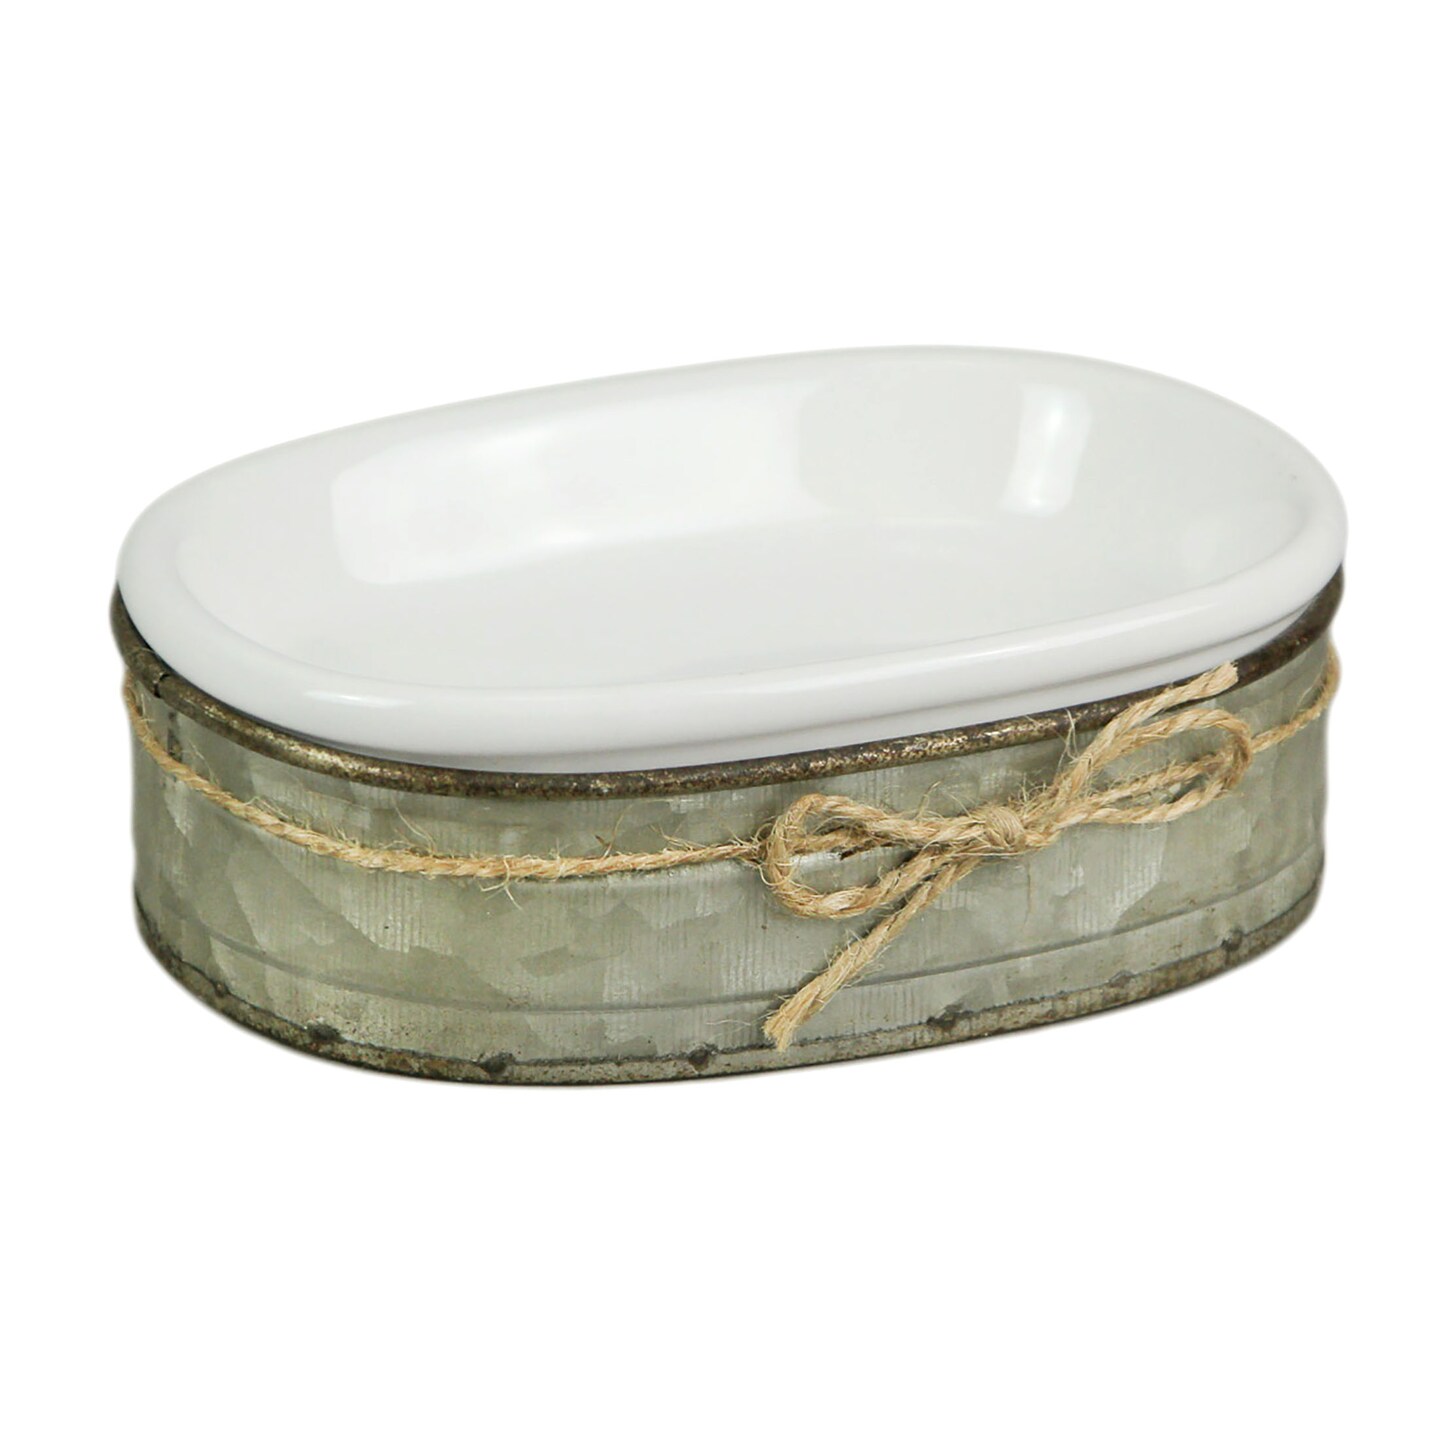 White Ceramic Soap Dish With Galvanized Zinc Finish Tray